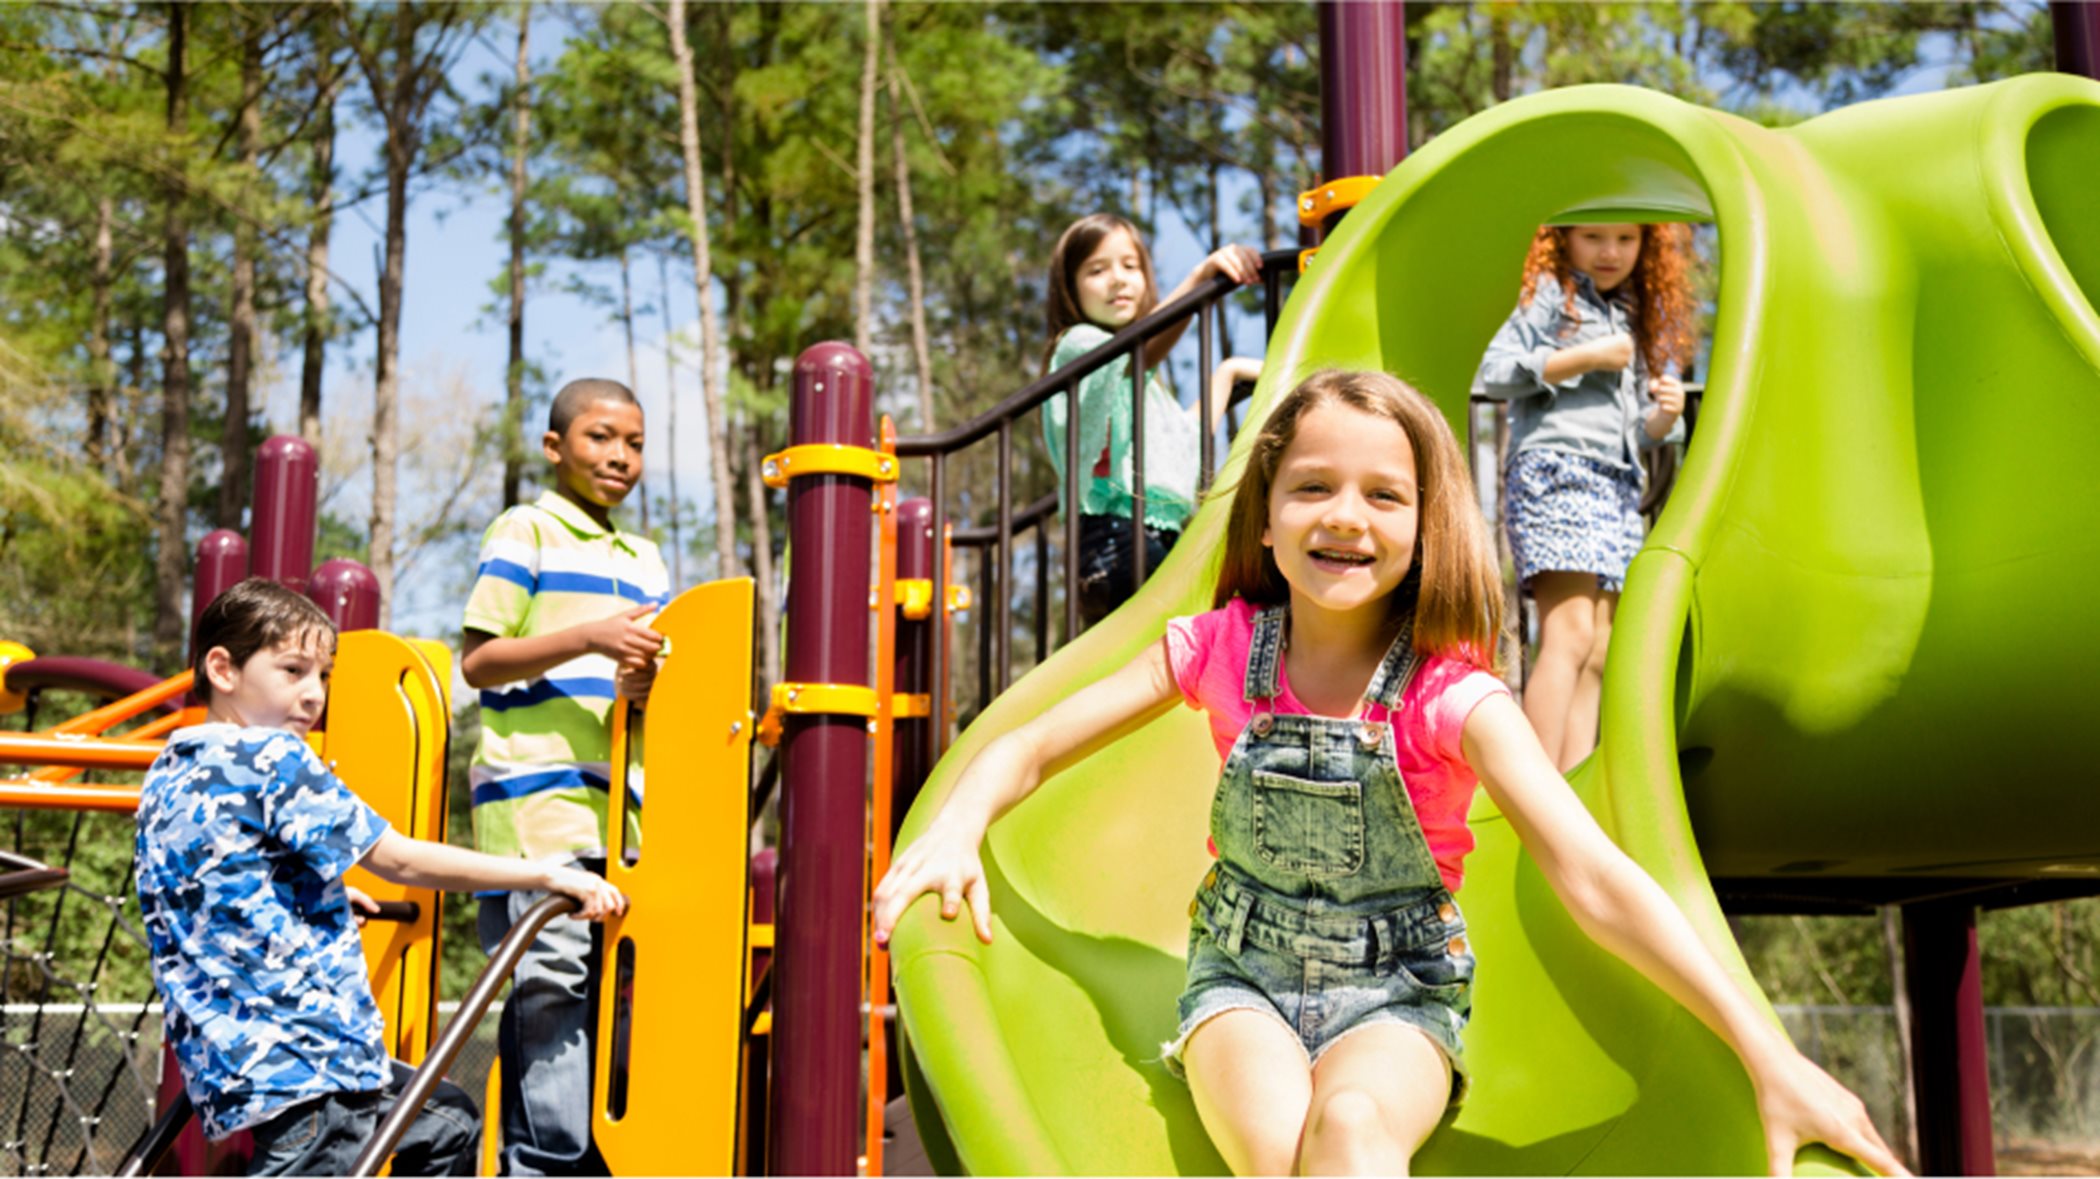 Kids on a playground slide